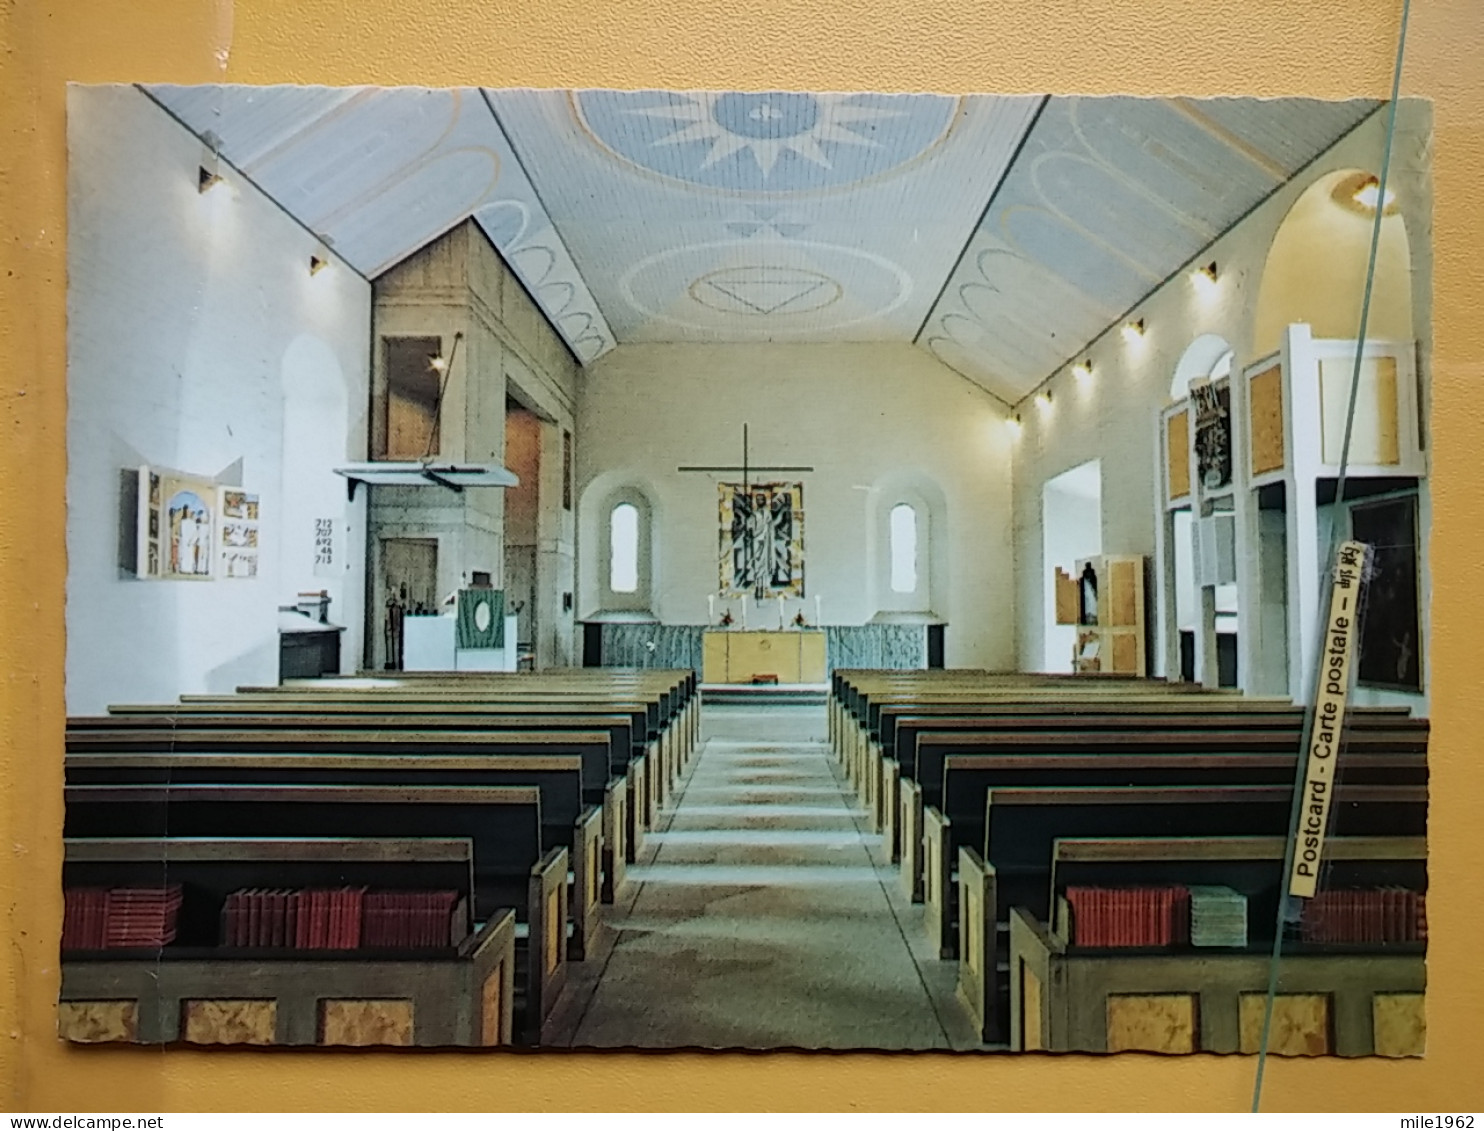 KOV 536-13 - SWEDEN , VIST KYRKA, CHURCH, EGLISE - Svezia